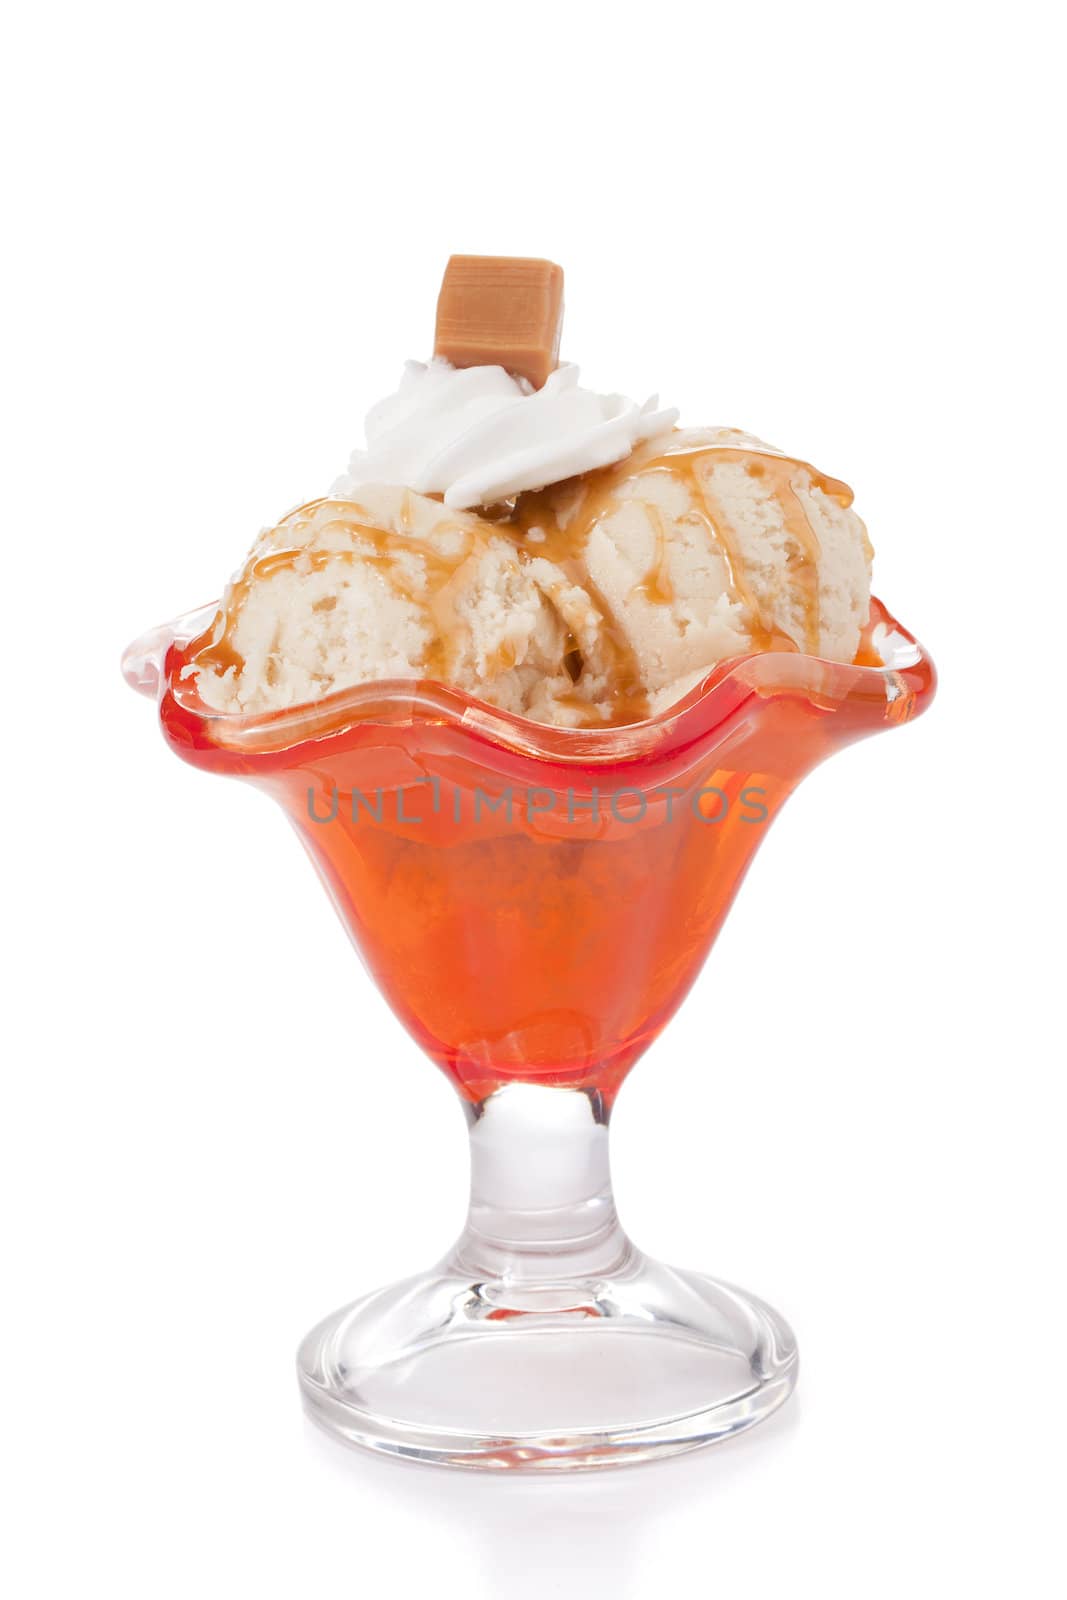 Dulce de leche ice creamwith caramel candy bar on top